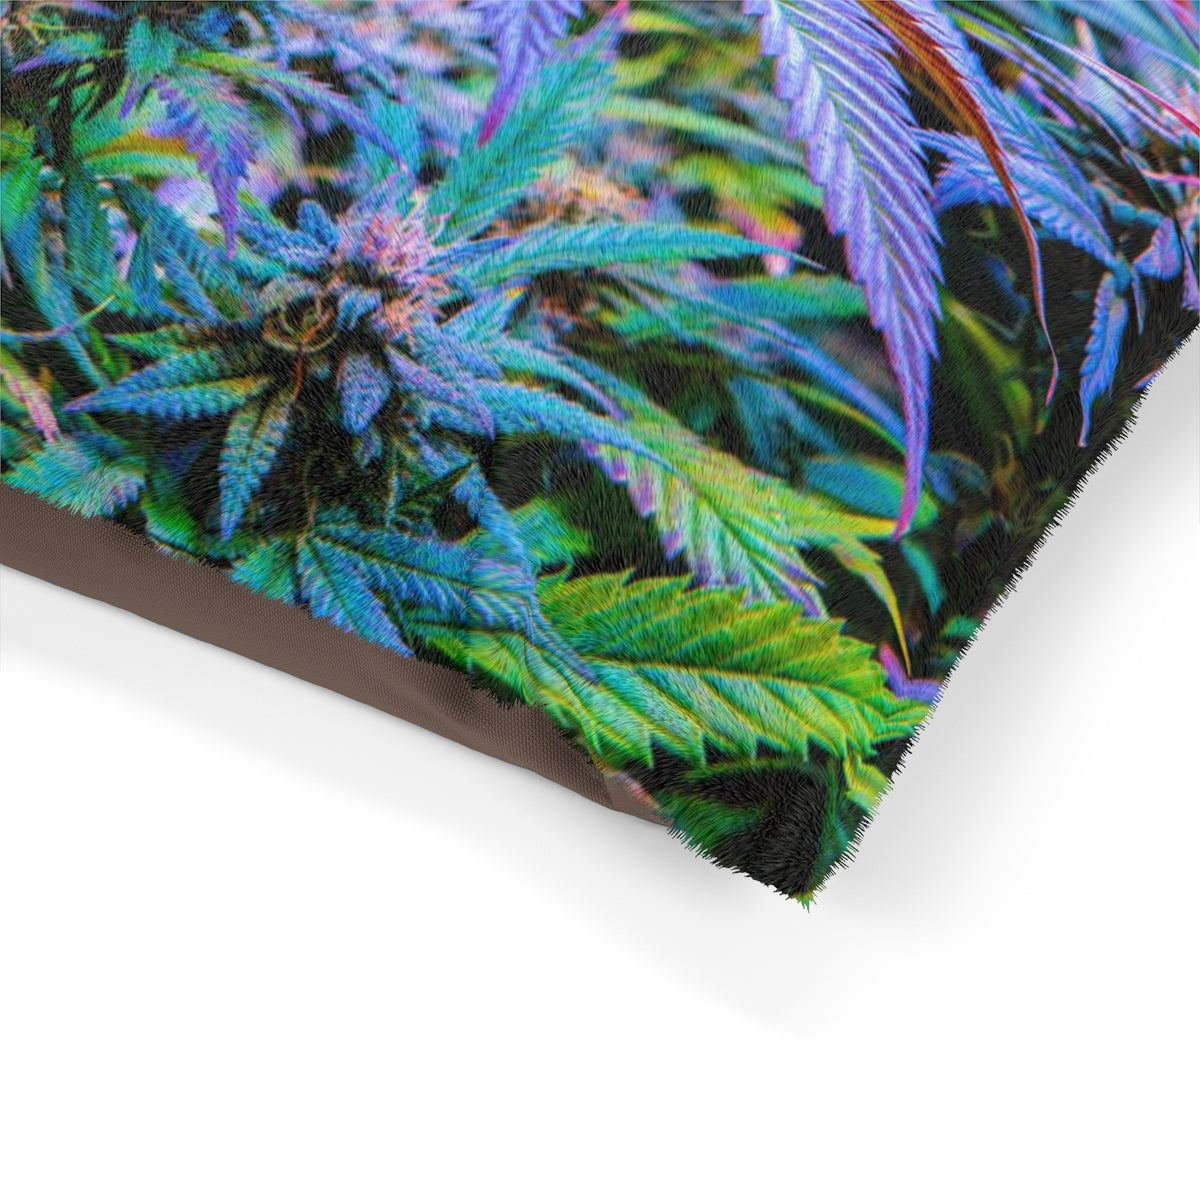 The Rainbow Cannabis Pet Bed